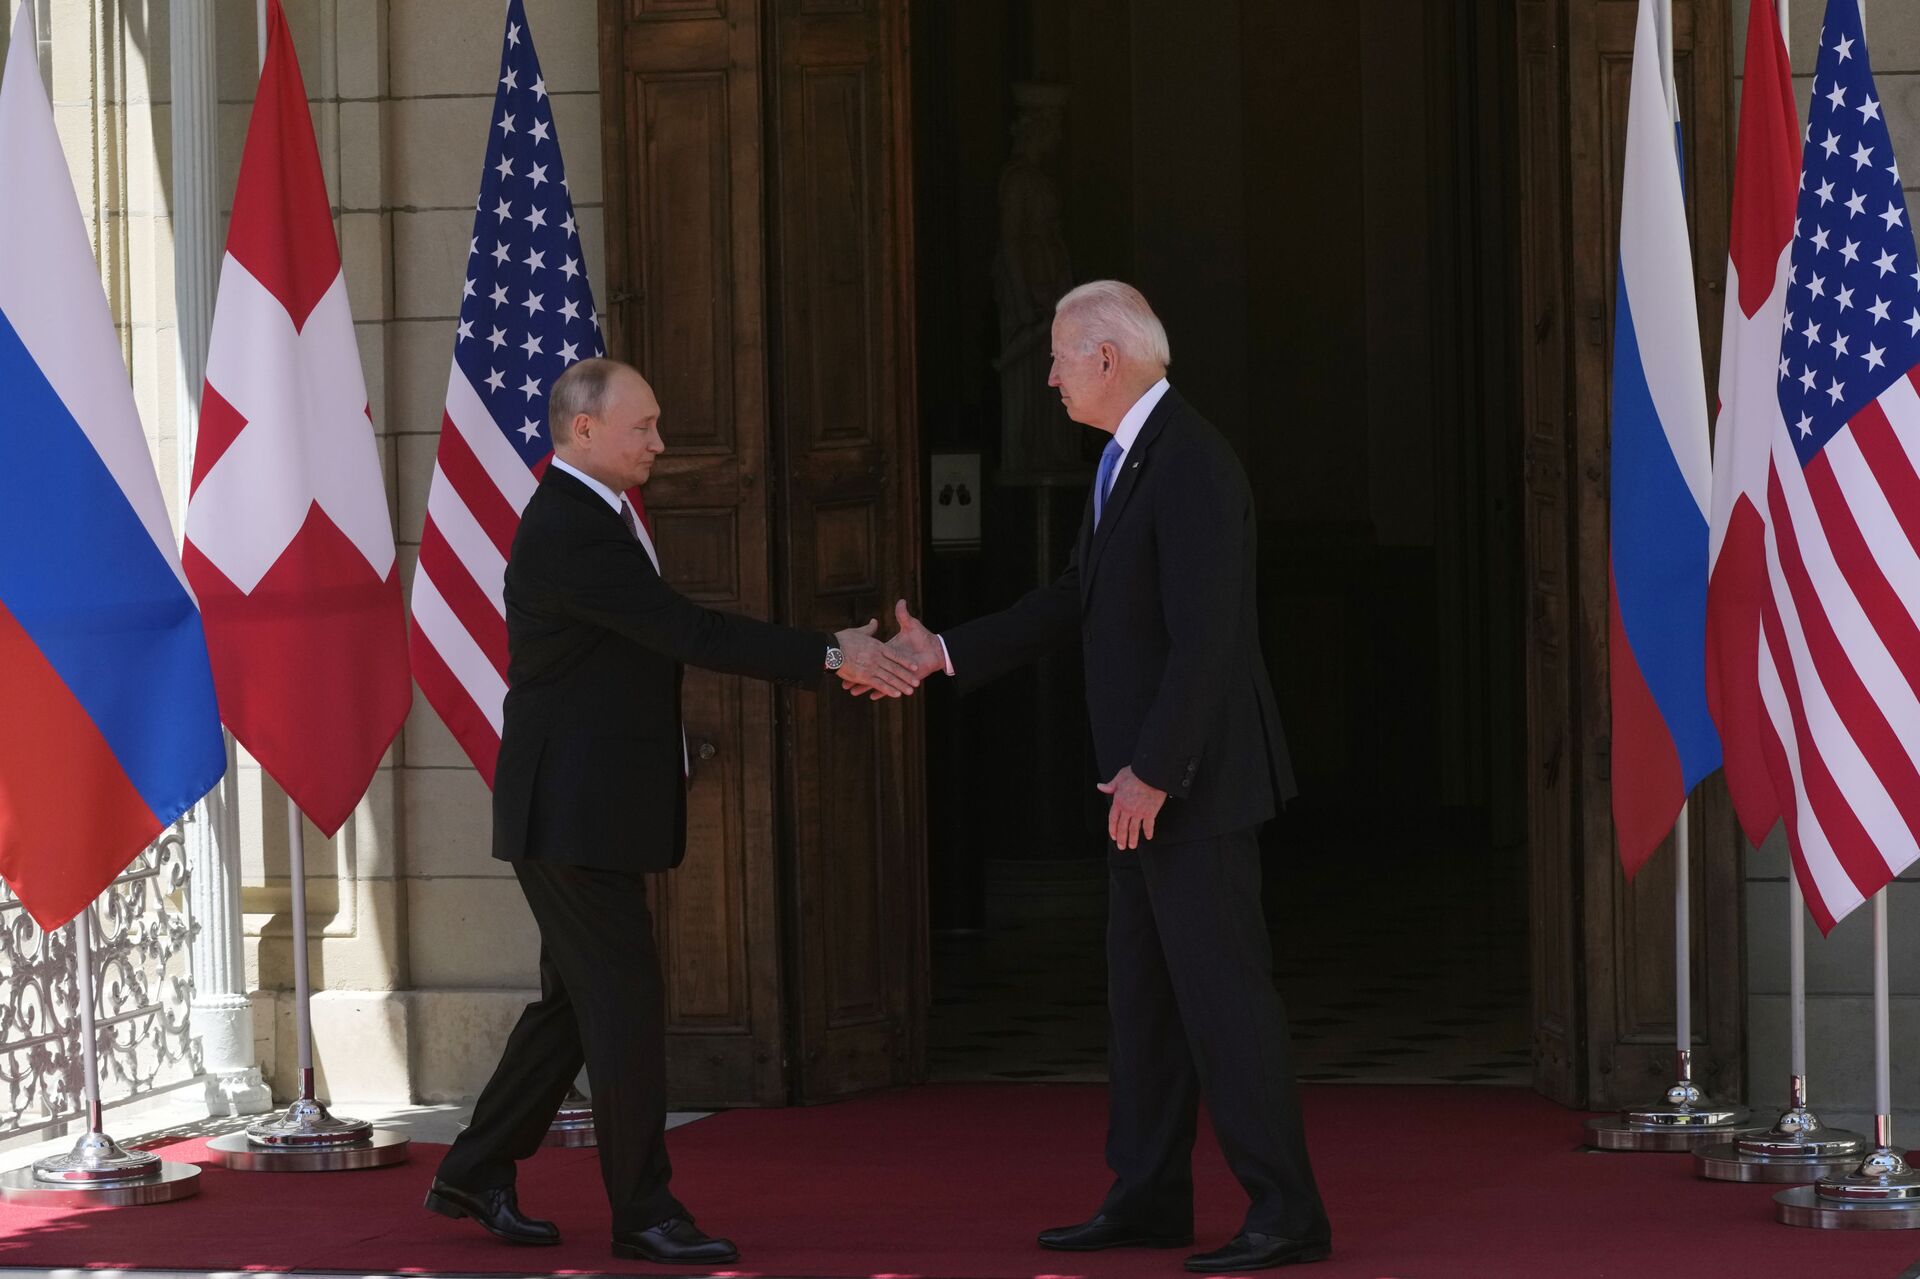 Russian President Vladimir Putin, left, and U.S President Joe Biden shake hands during their meeting at the 'Villa la Grange' in Geneva, Switzerland in Geneva, Switzerland, Wednesday, June 16, 2021 - Sputnik International, 1920, 07.12.2021